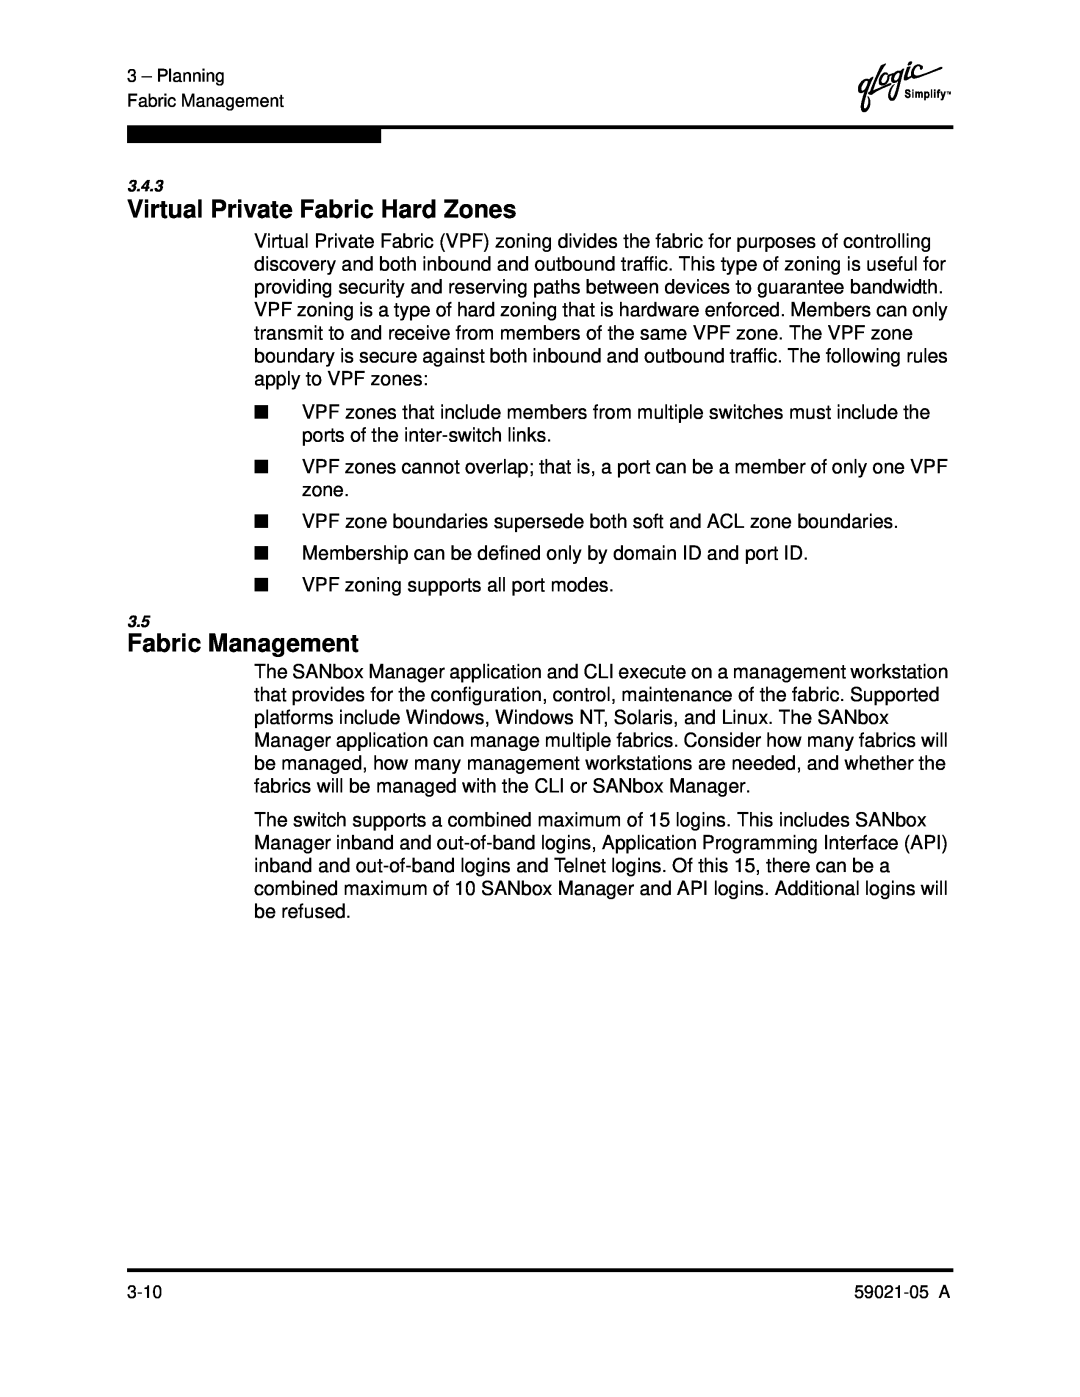 Q-Logic 59021-05 manual Virtual Private Fabric Hard Zones, Fabric Management 